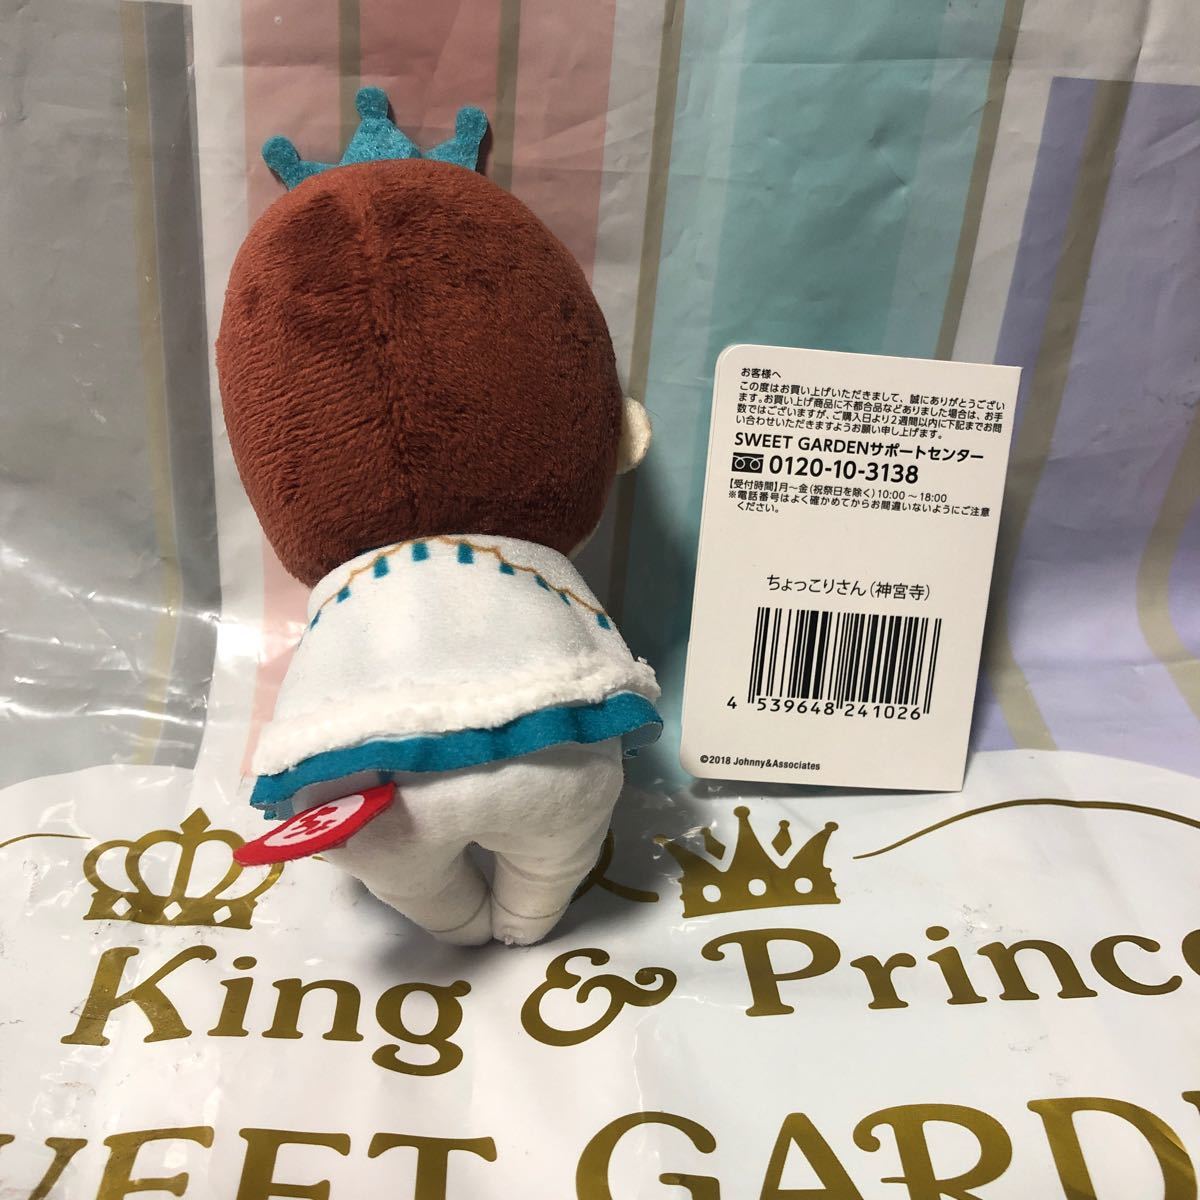 King&Prince ちょっこりさん Sweet GARDEN キンプリ 神宮寺勇太さん